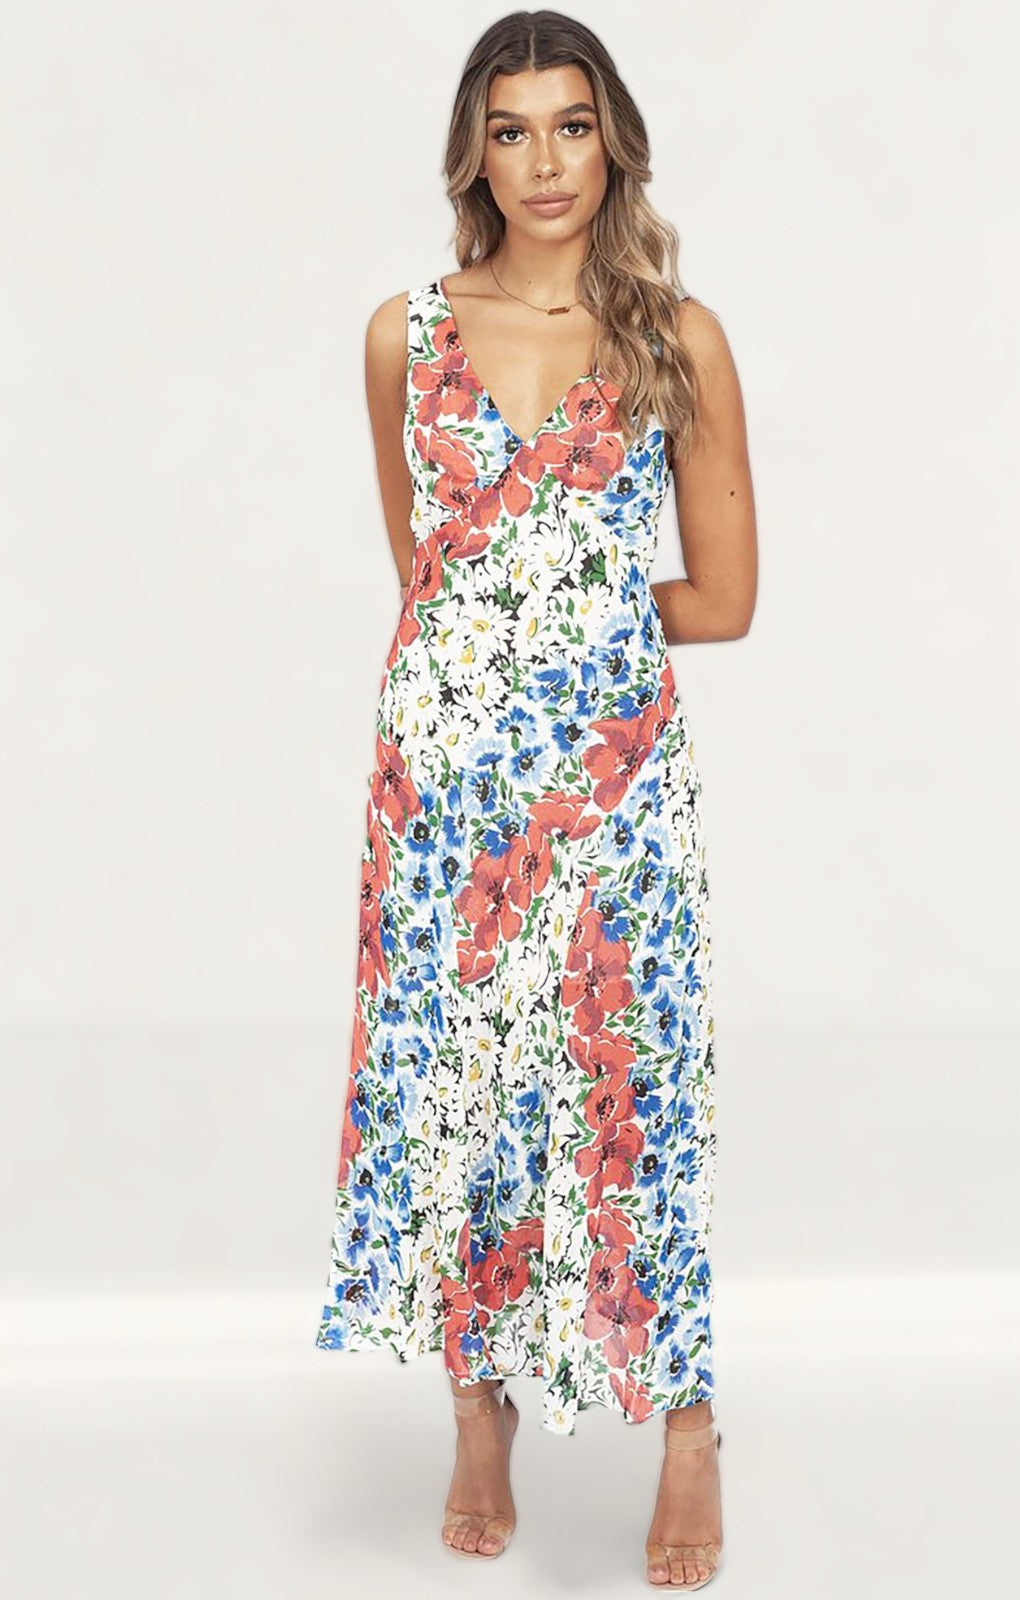 Topshop Summer Floral Midi Dress product image